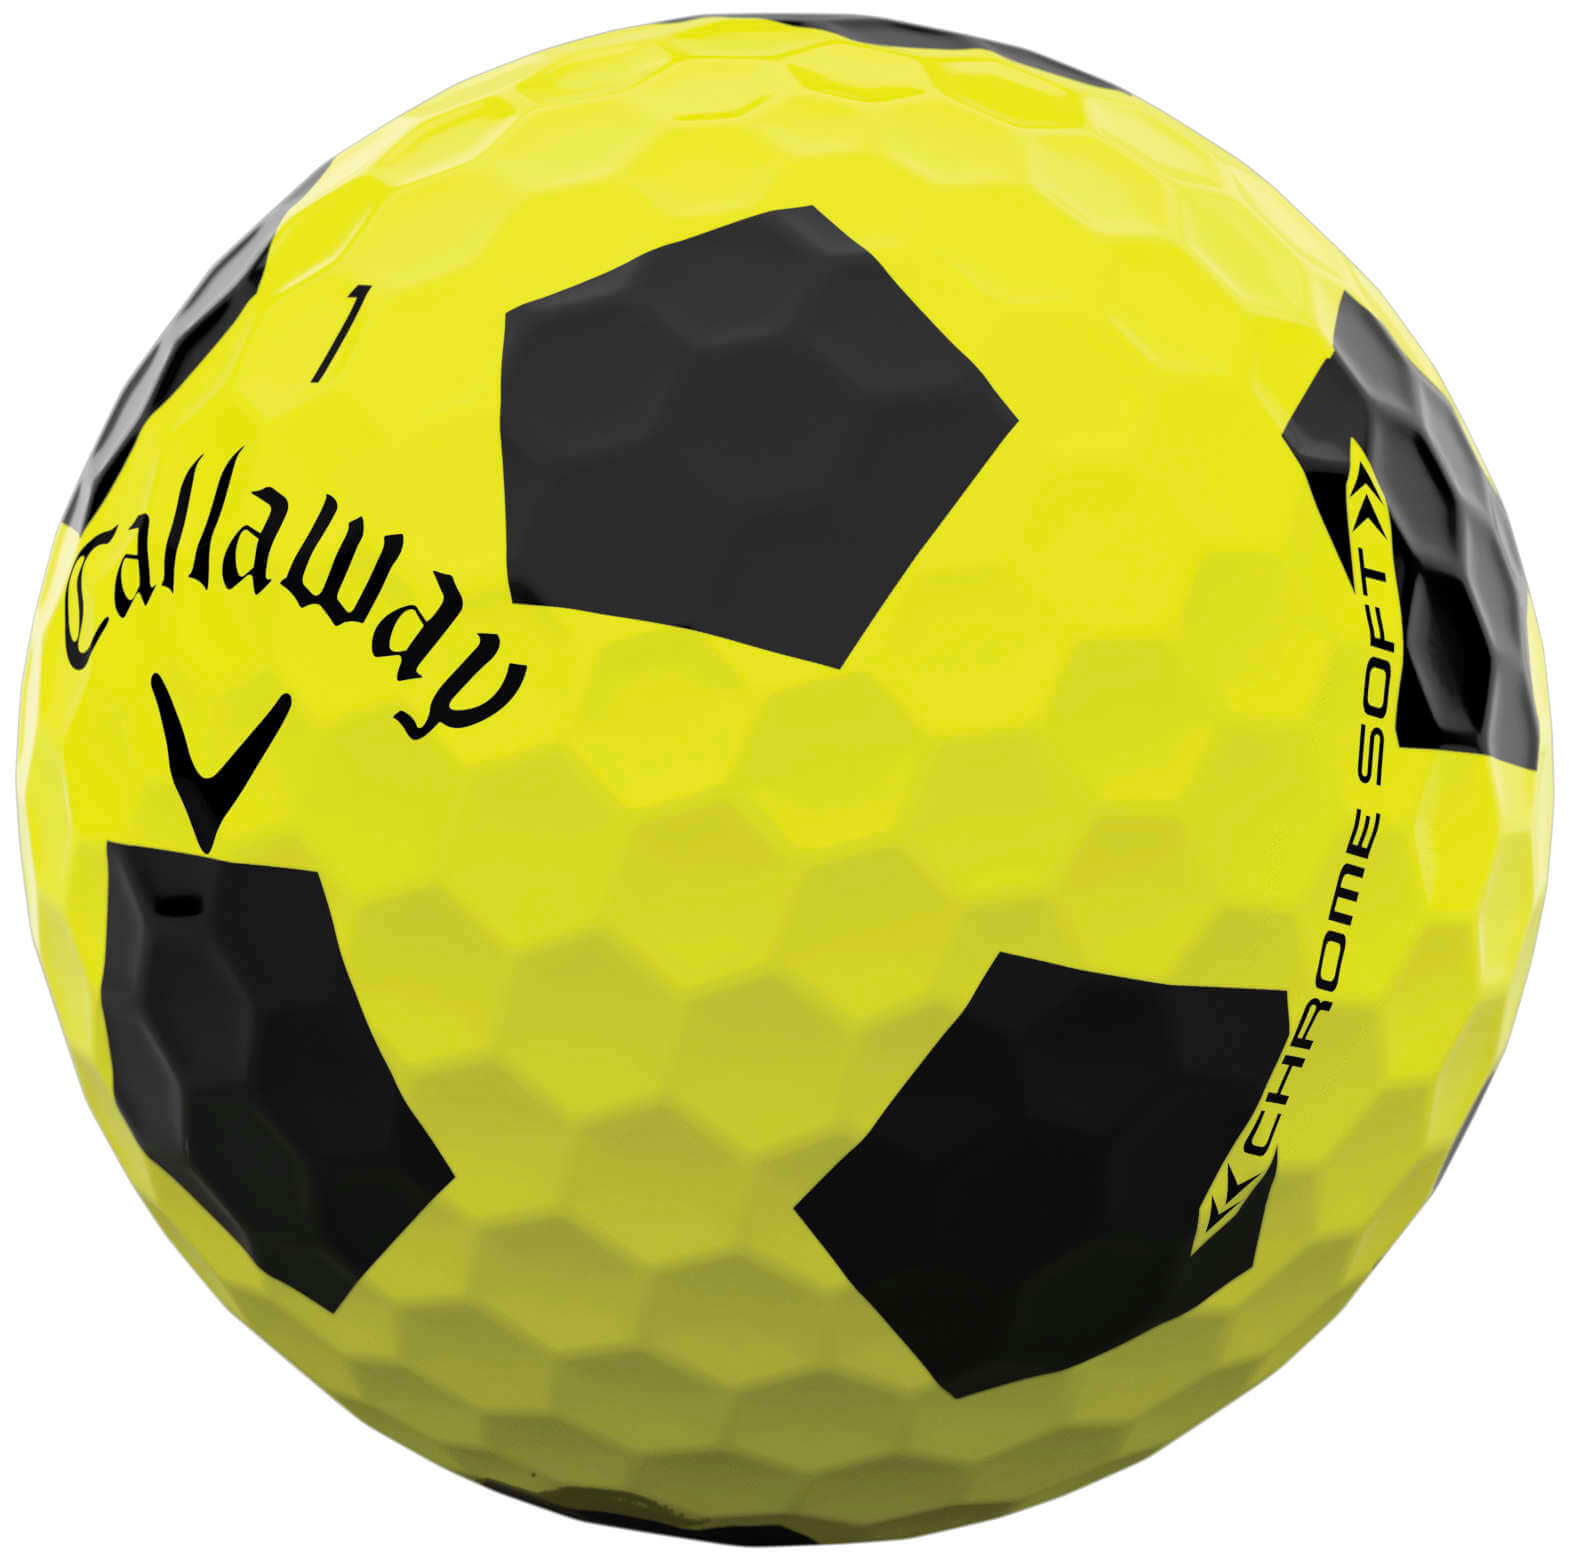 Callaway Chrome Soft TRUVIS Golfbälle, yellow/black